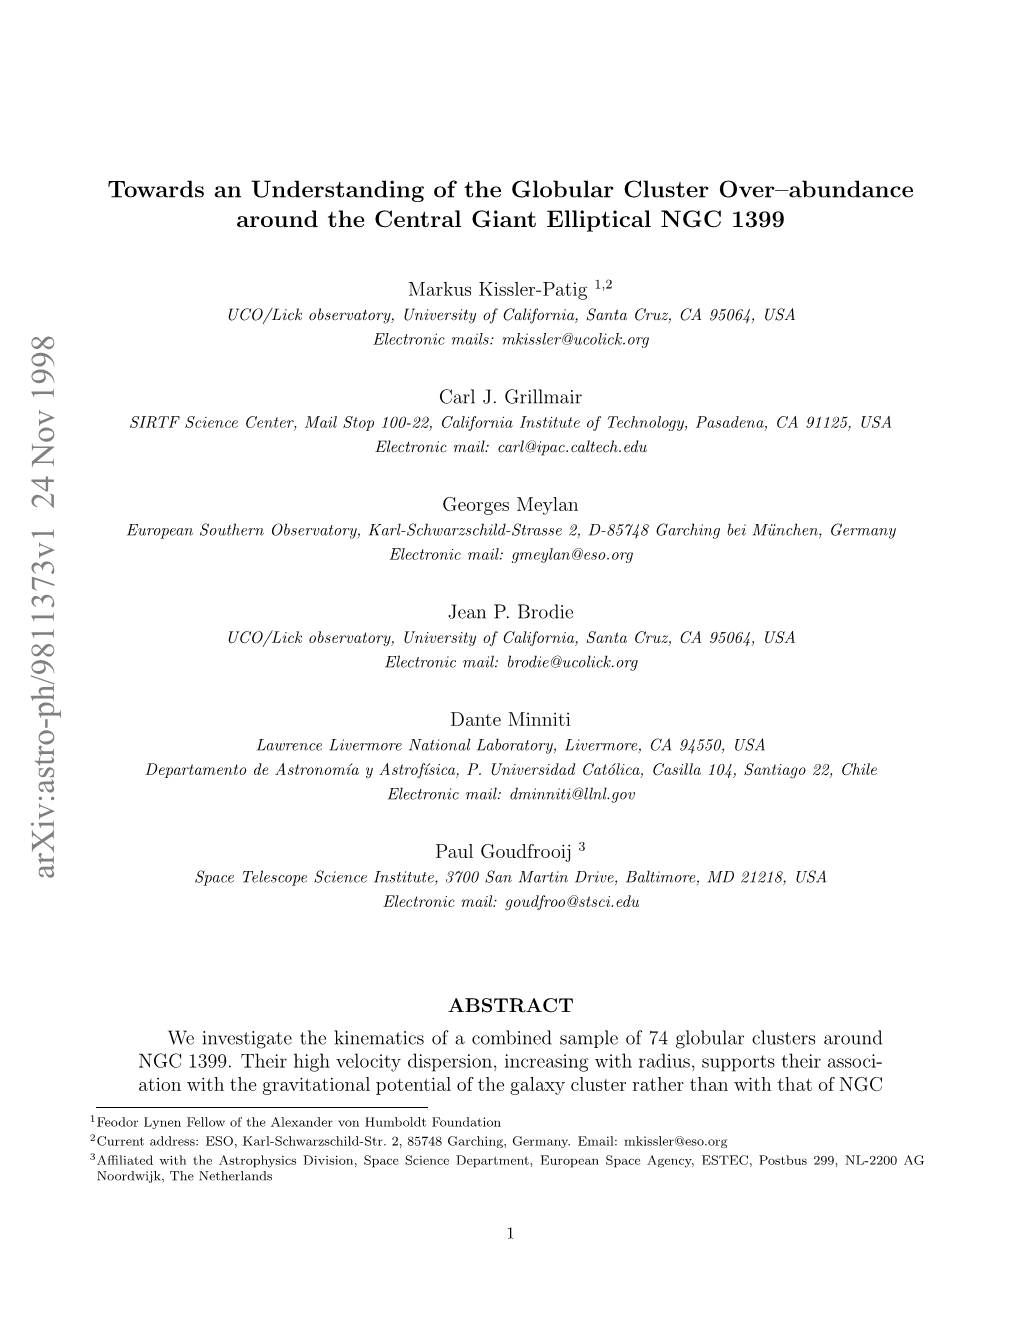 Towards an Understanding of the Globular Cluster Over--Abundance